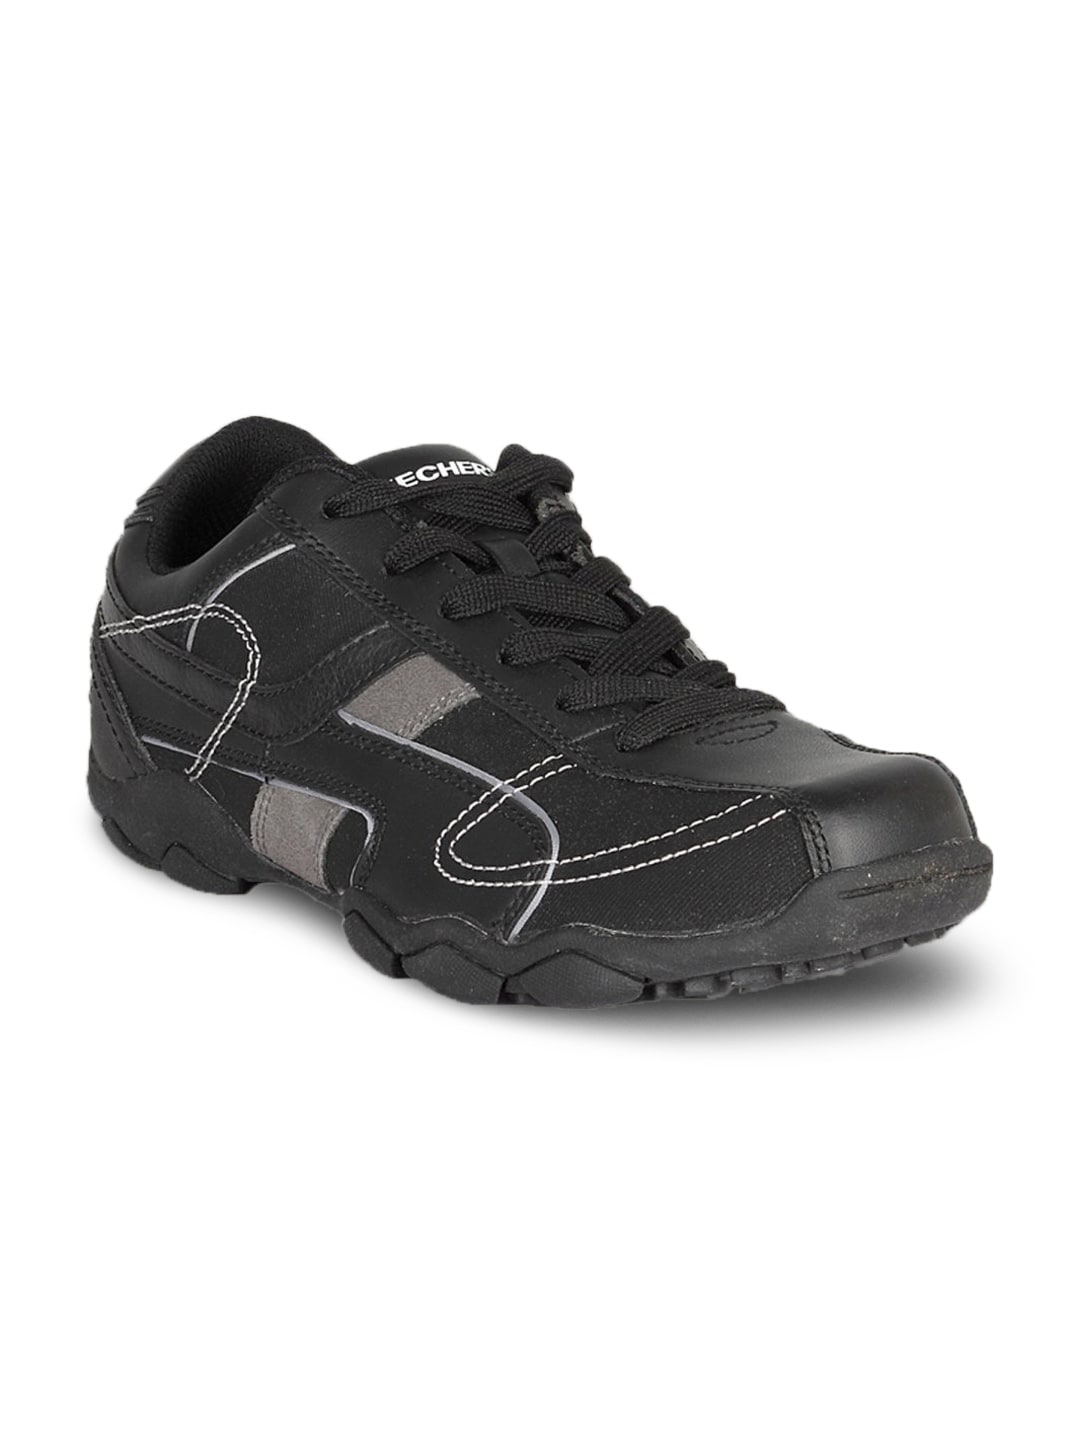 Skechers Men's Torino Black Shoe